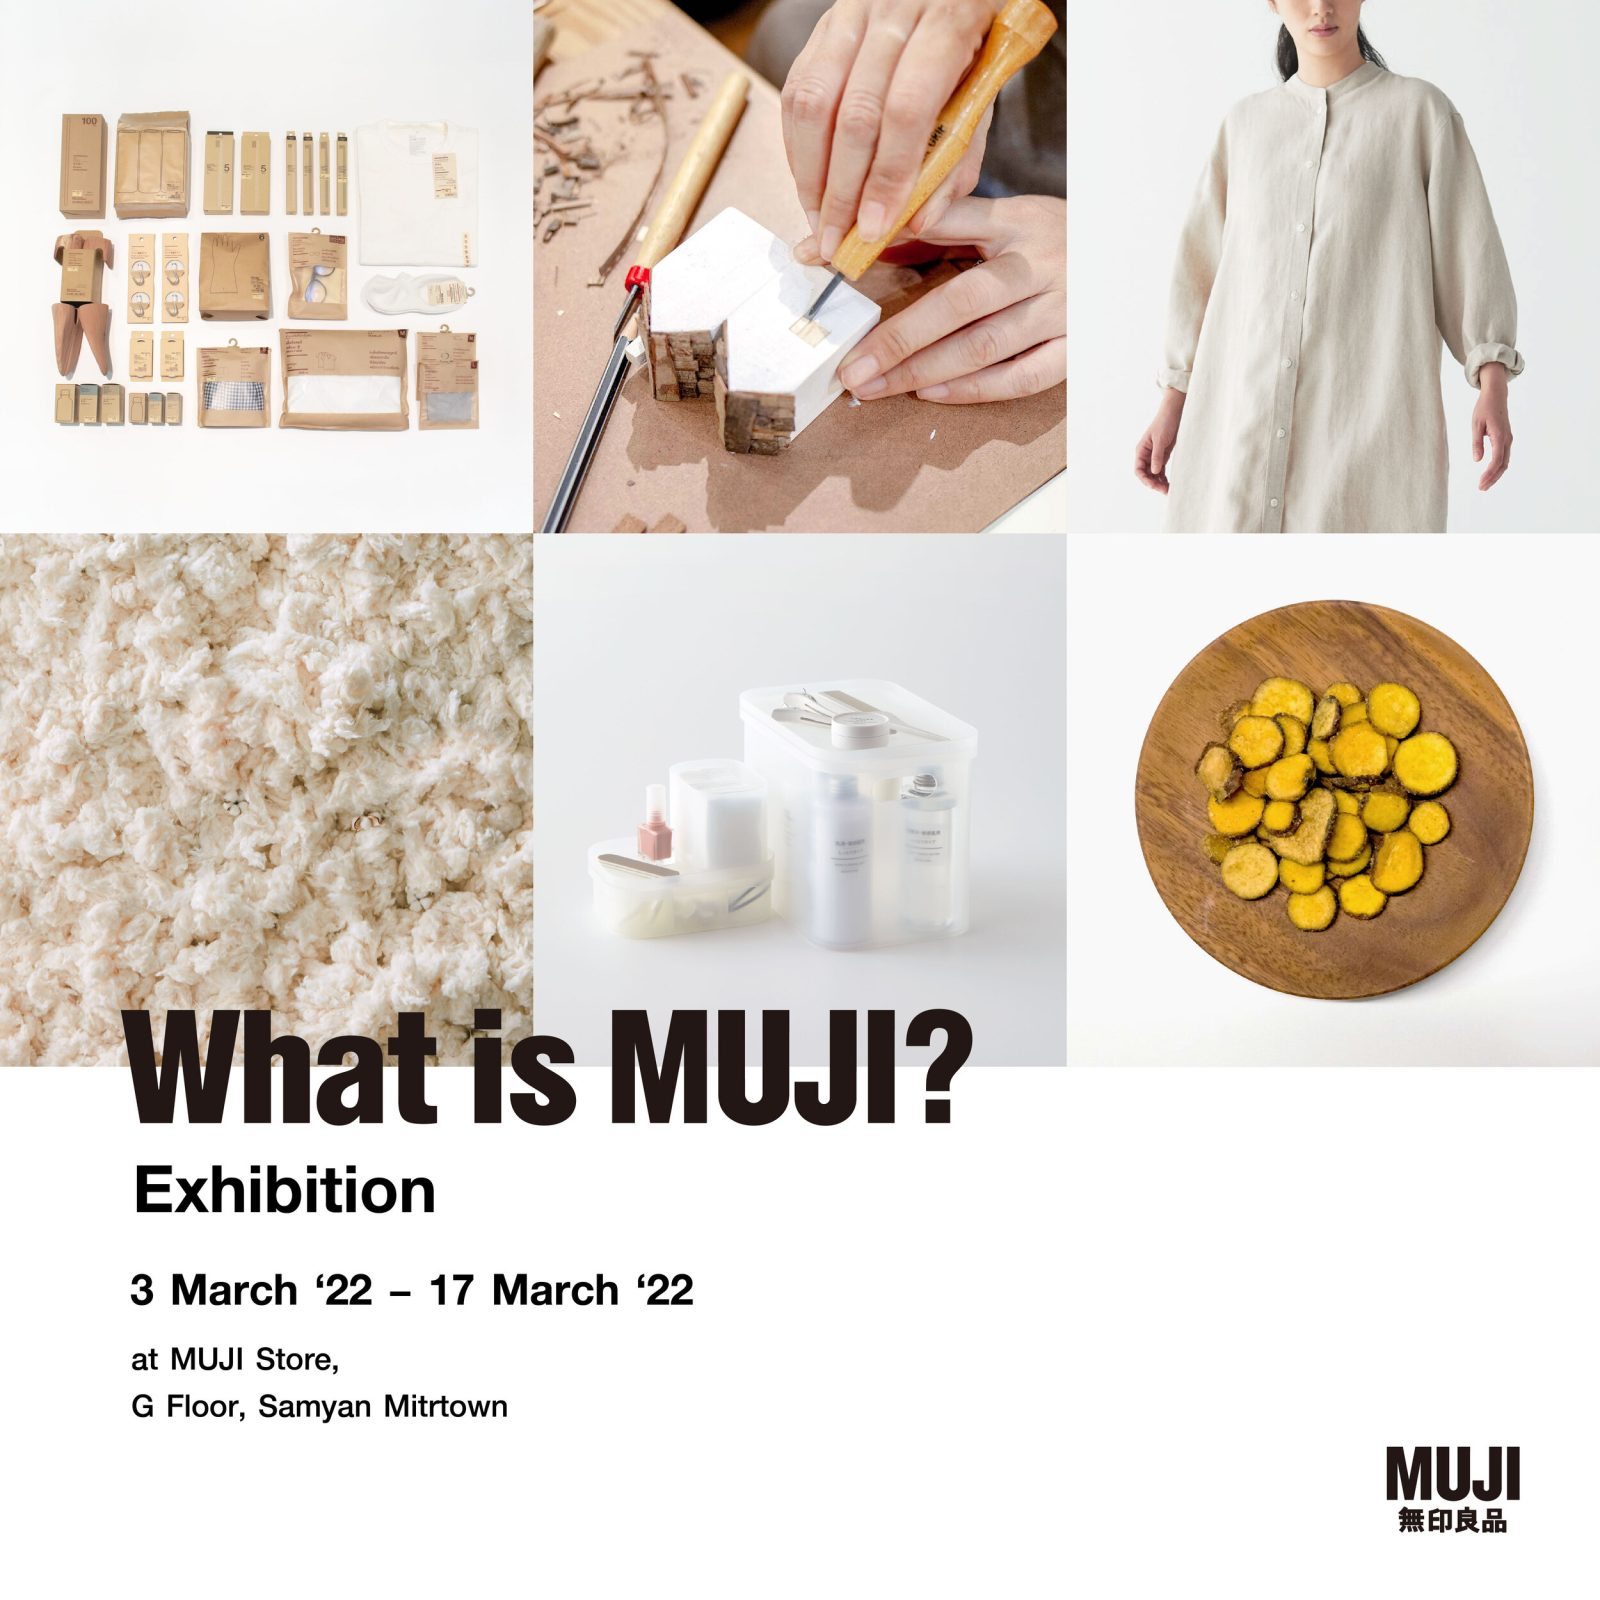 “What is MUJI?” งานแสดงแนวคิดสไตล์มูจิ จากปรัชญาเพื่อคุณภาพชีวิตอย่างเรียบง่าย สู่การเป็นแบรนด์ยั่งยืนอย่างเต็มตัว